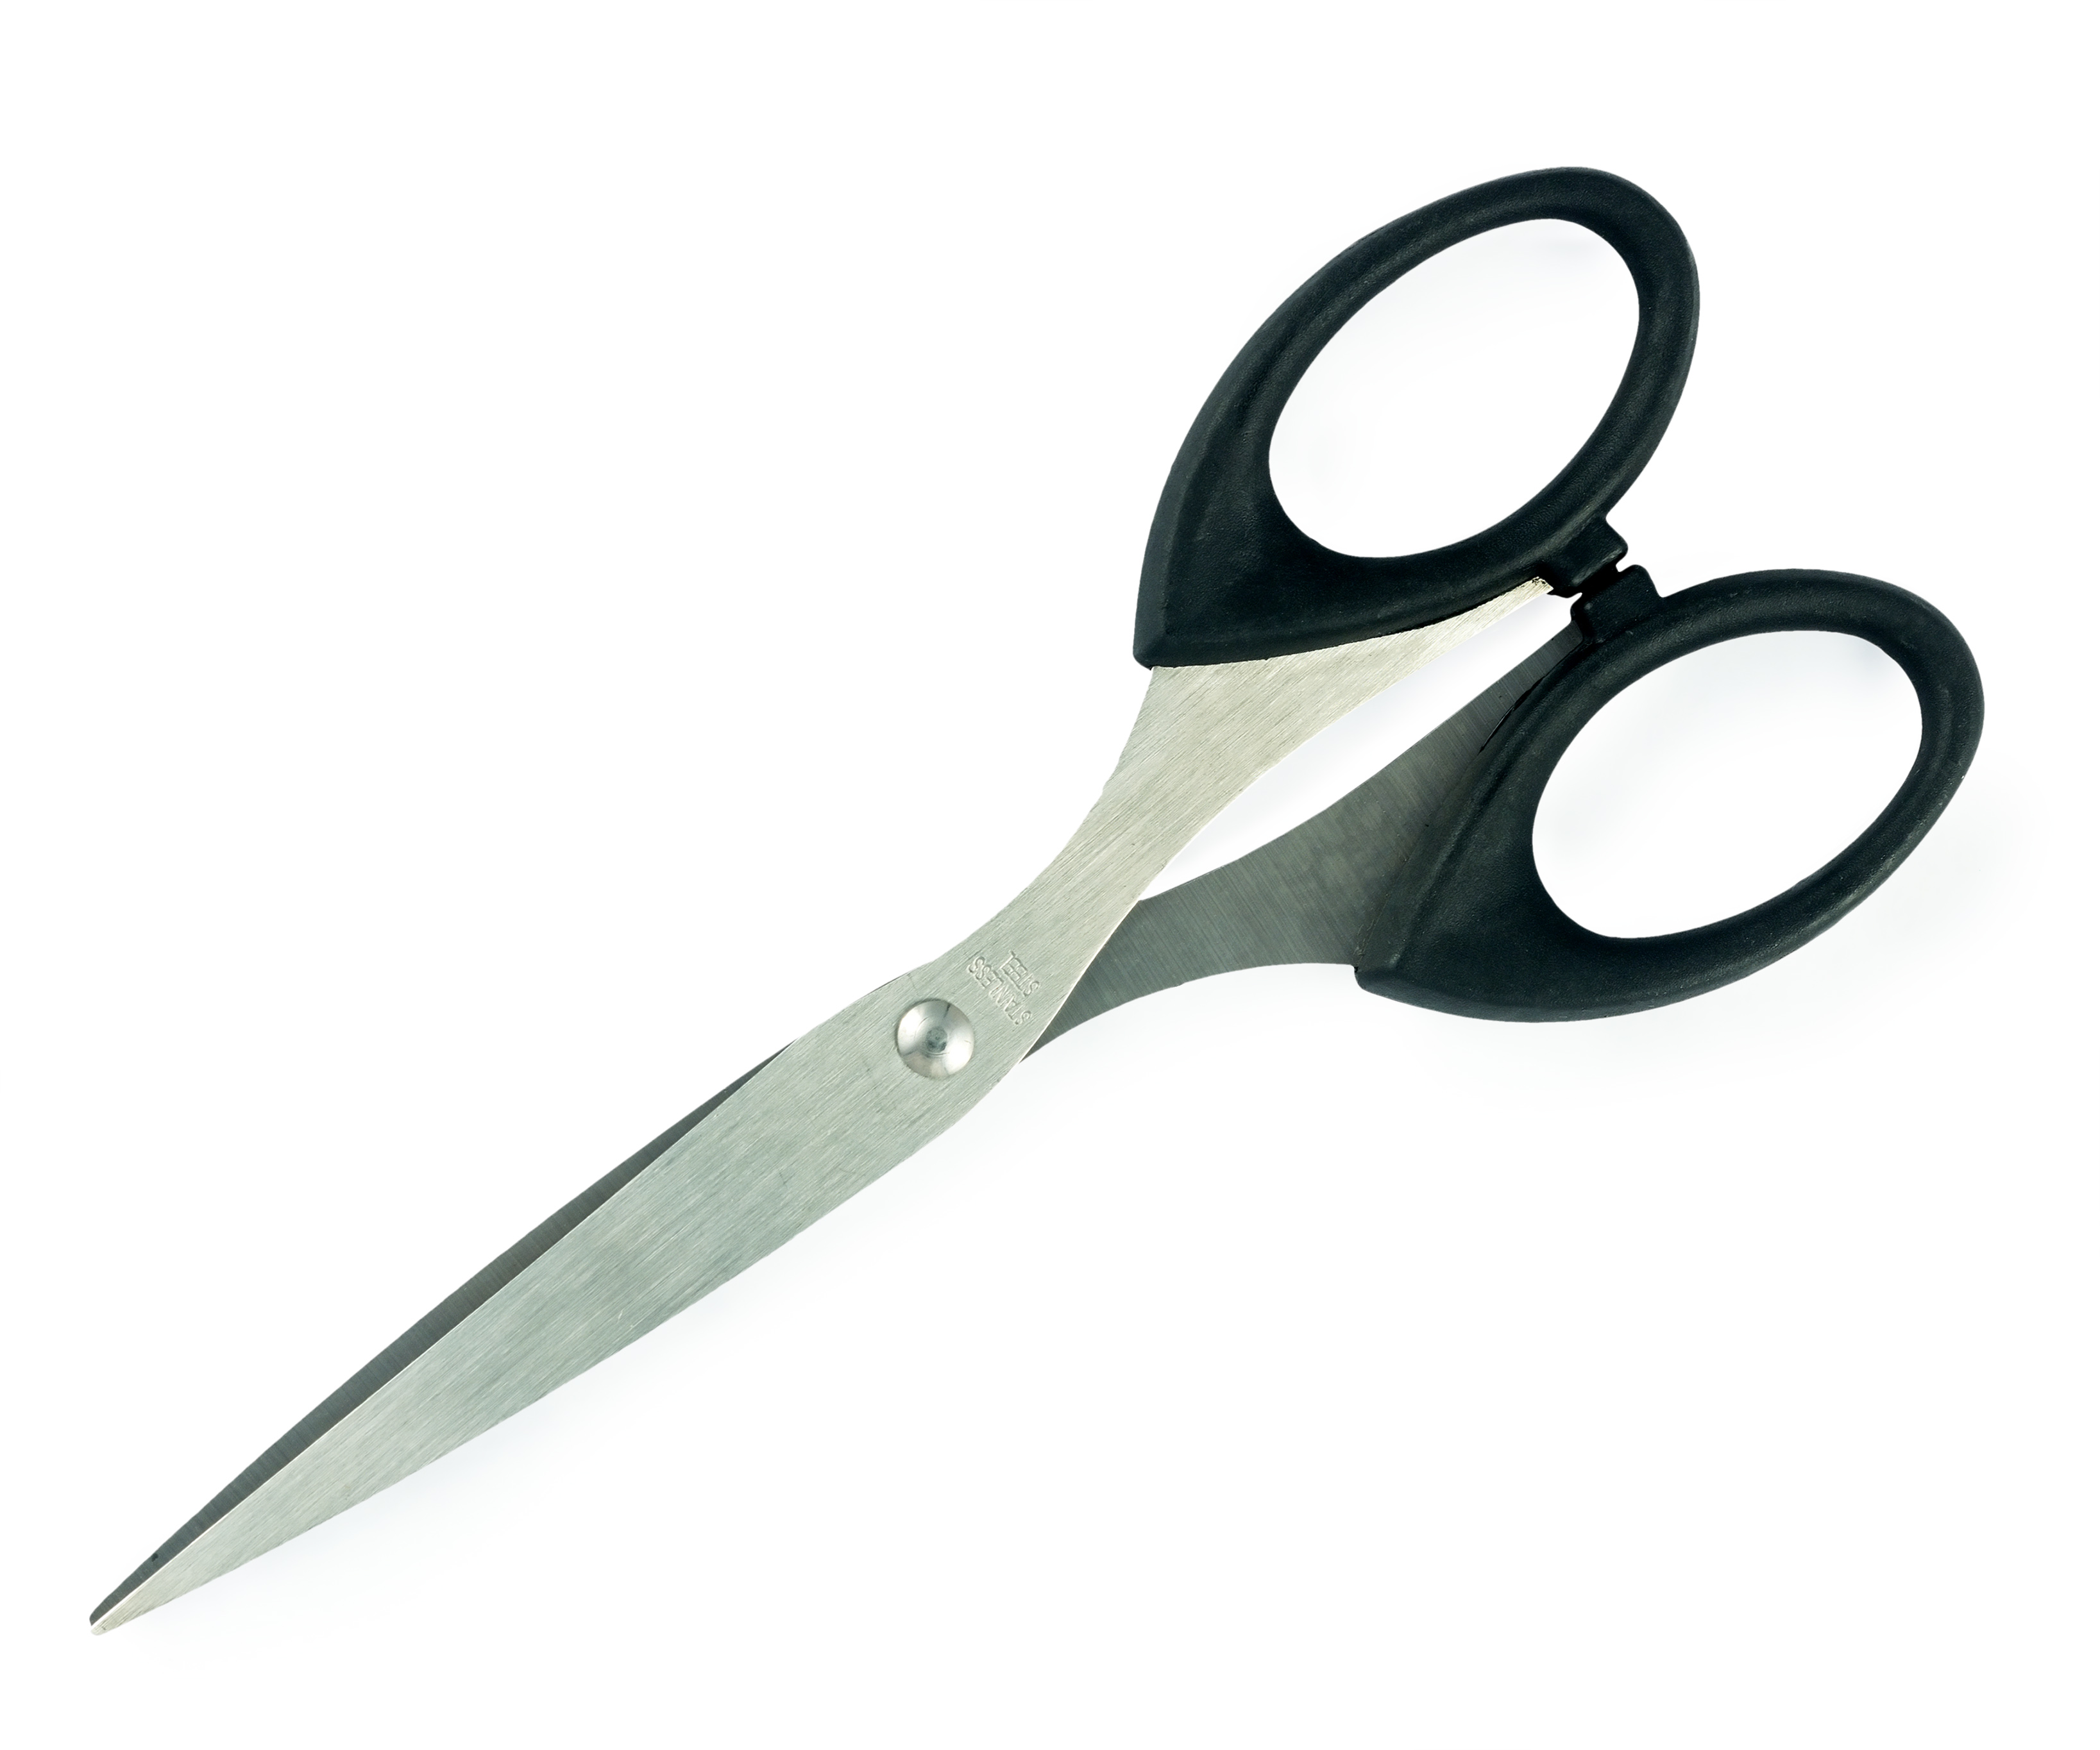 Pair of scissors with black handle, 2015-06-07